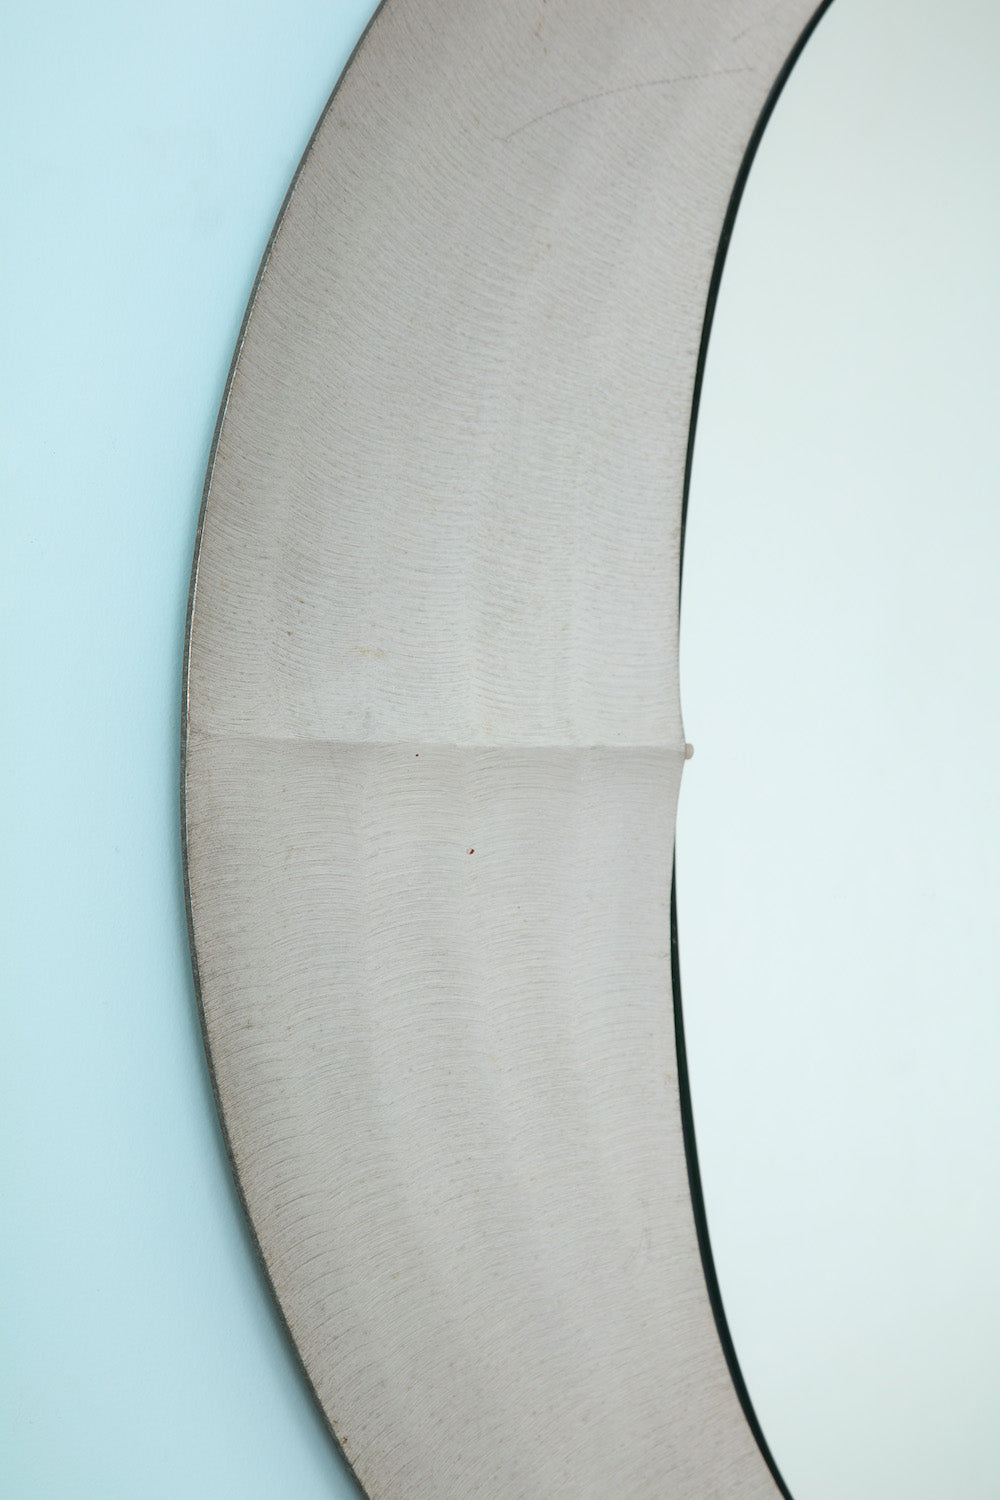 Rare Circular Mirror By Lorenzo Burchiellaro